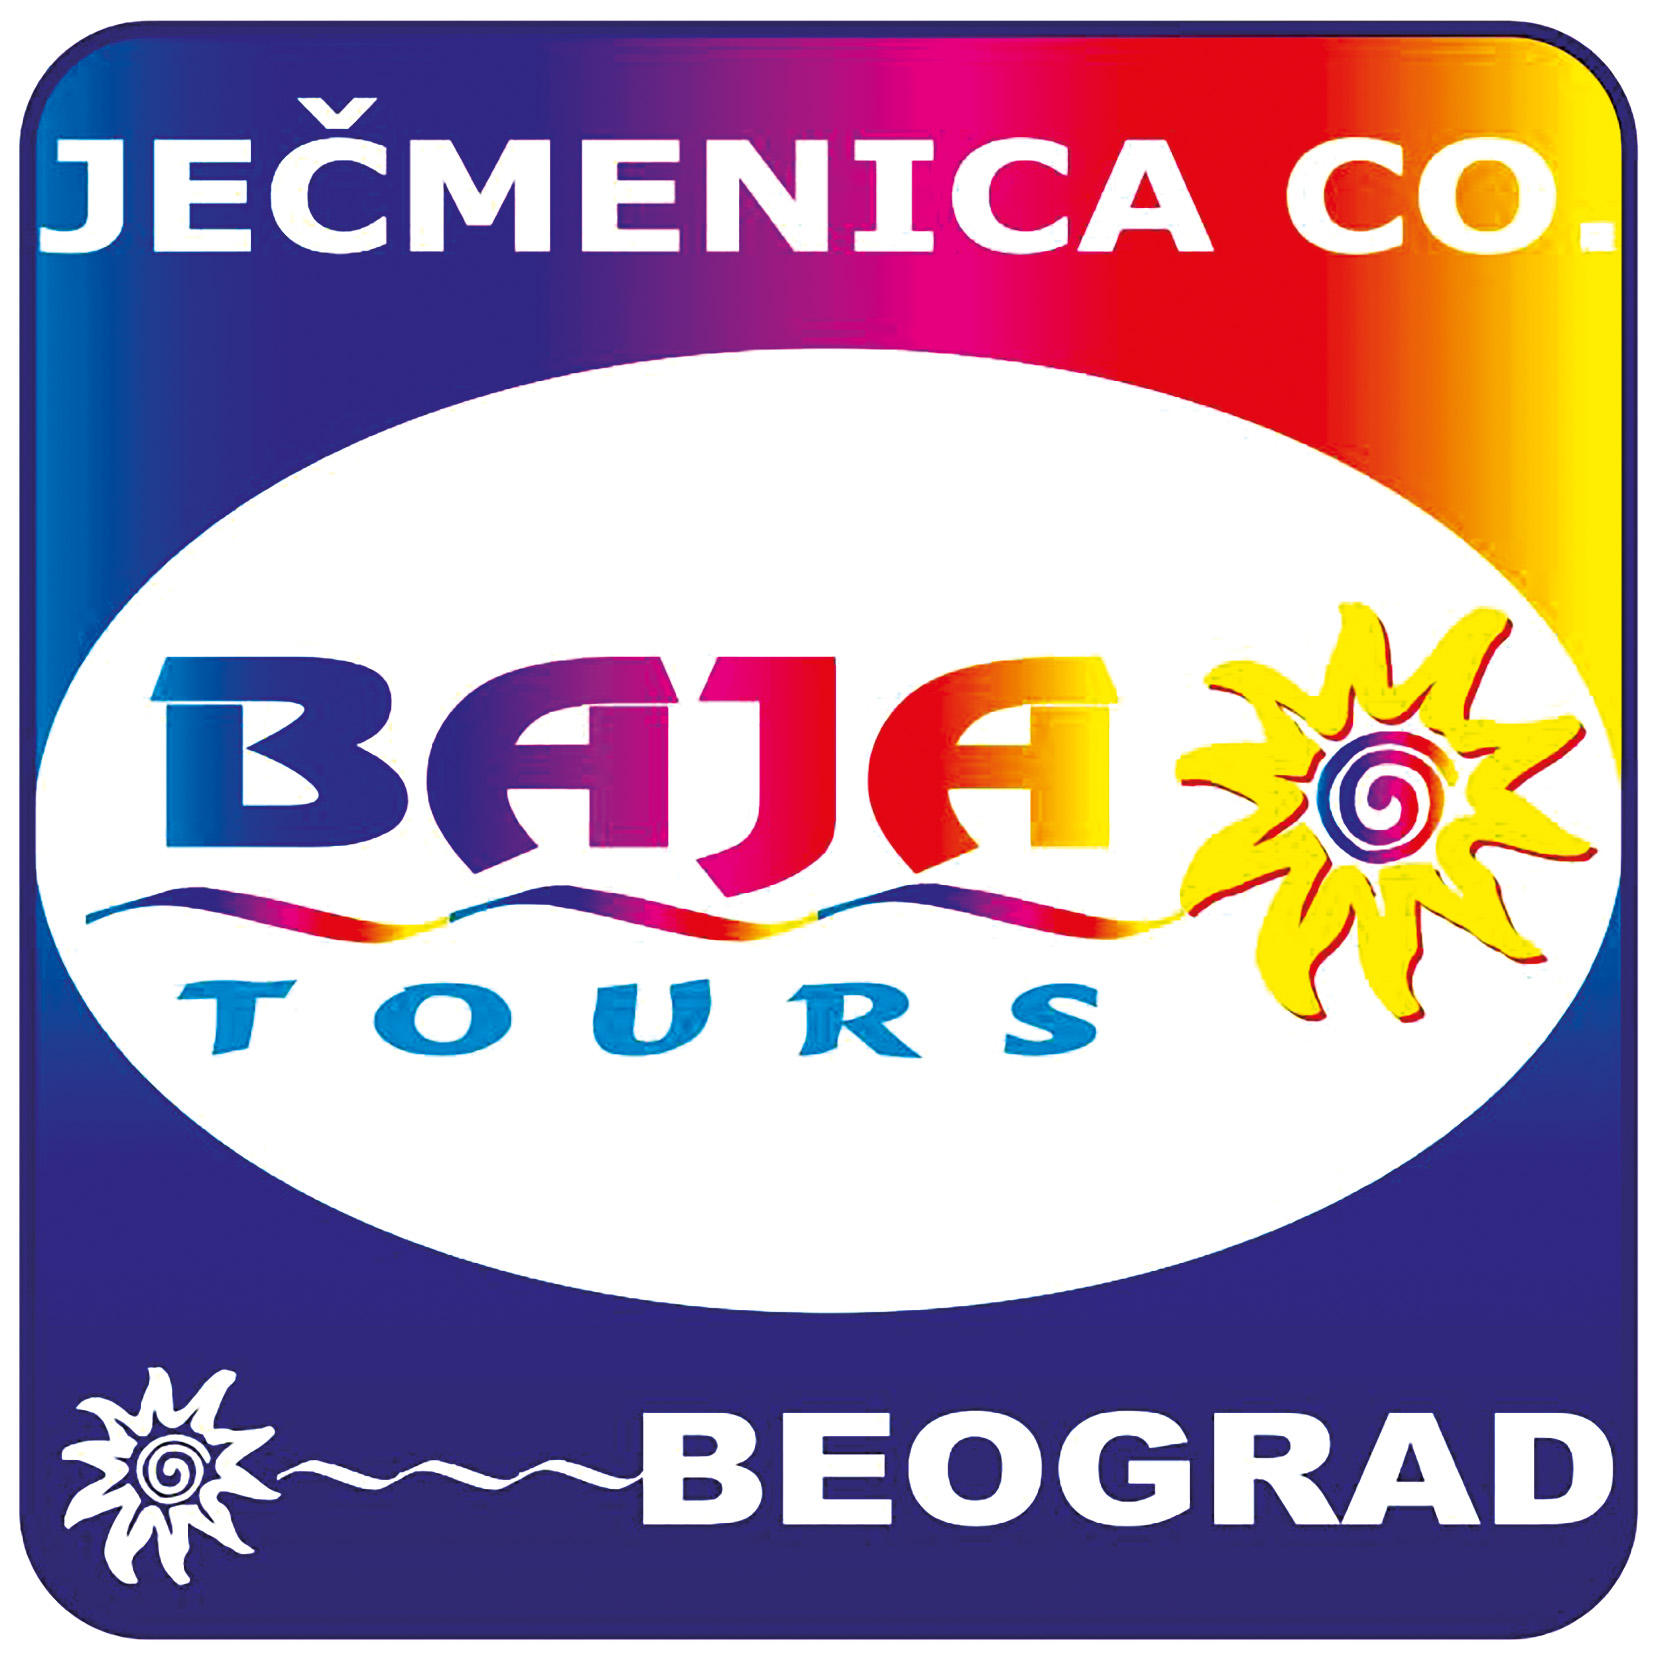 Jecmenica Co Baja Tours Beograd